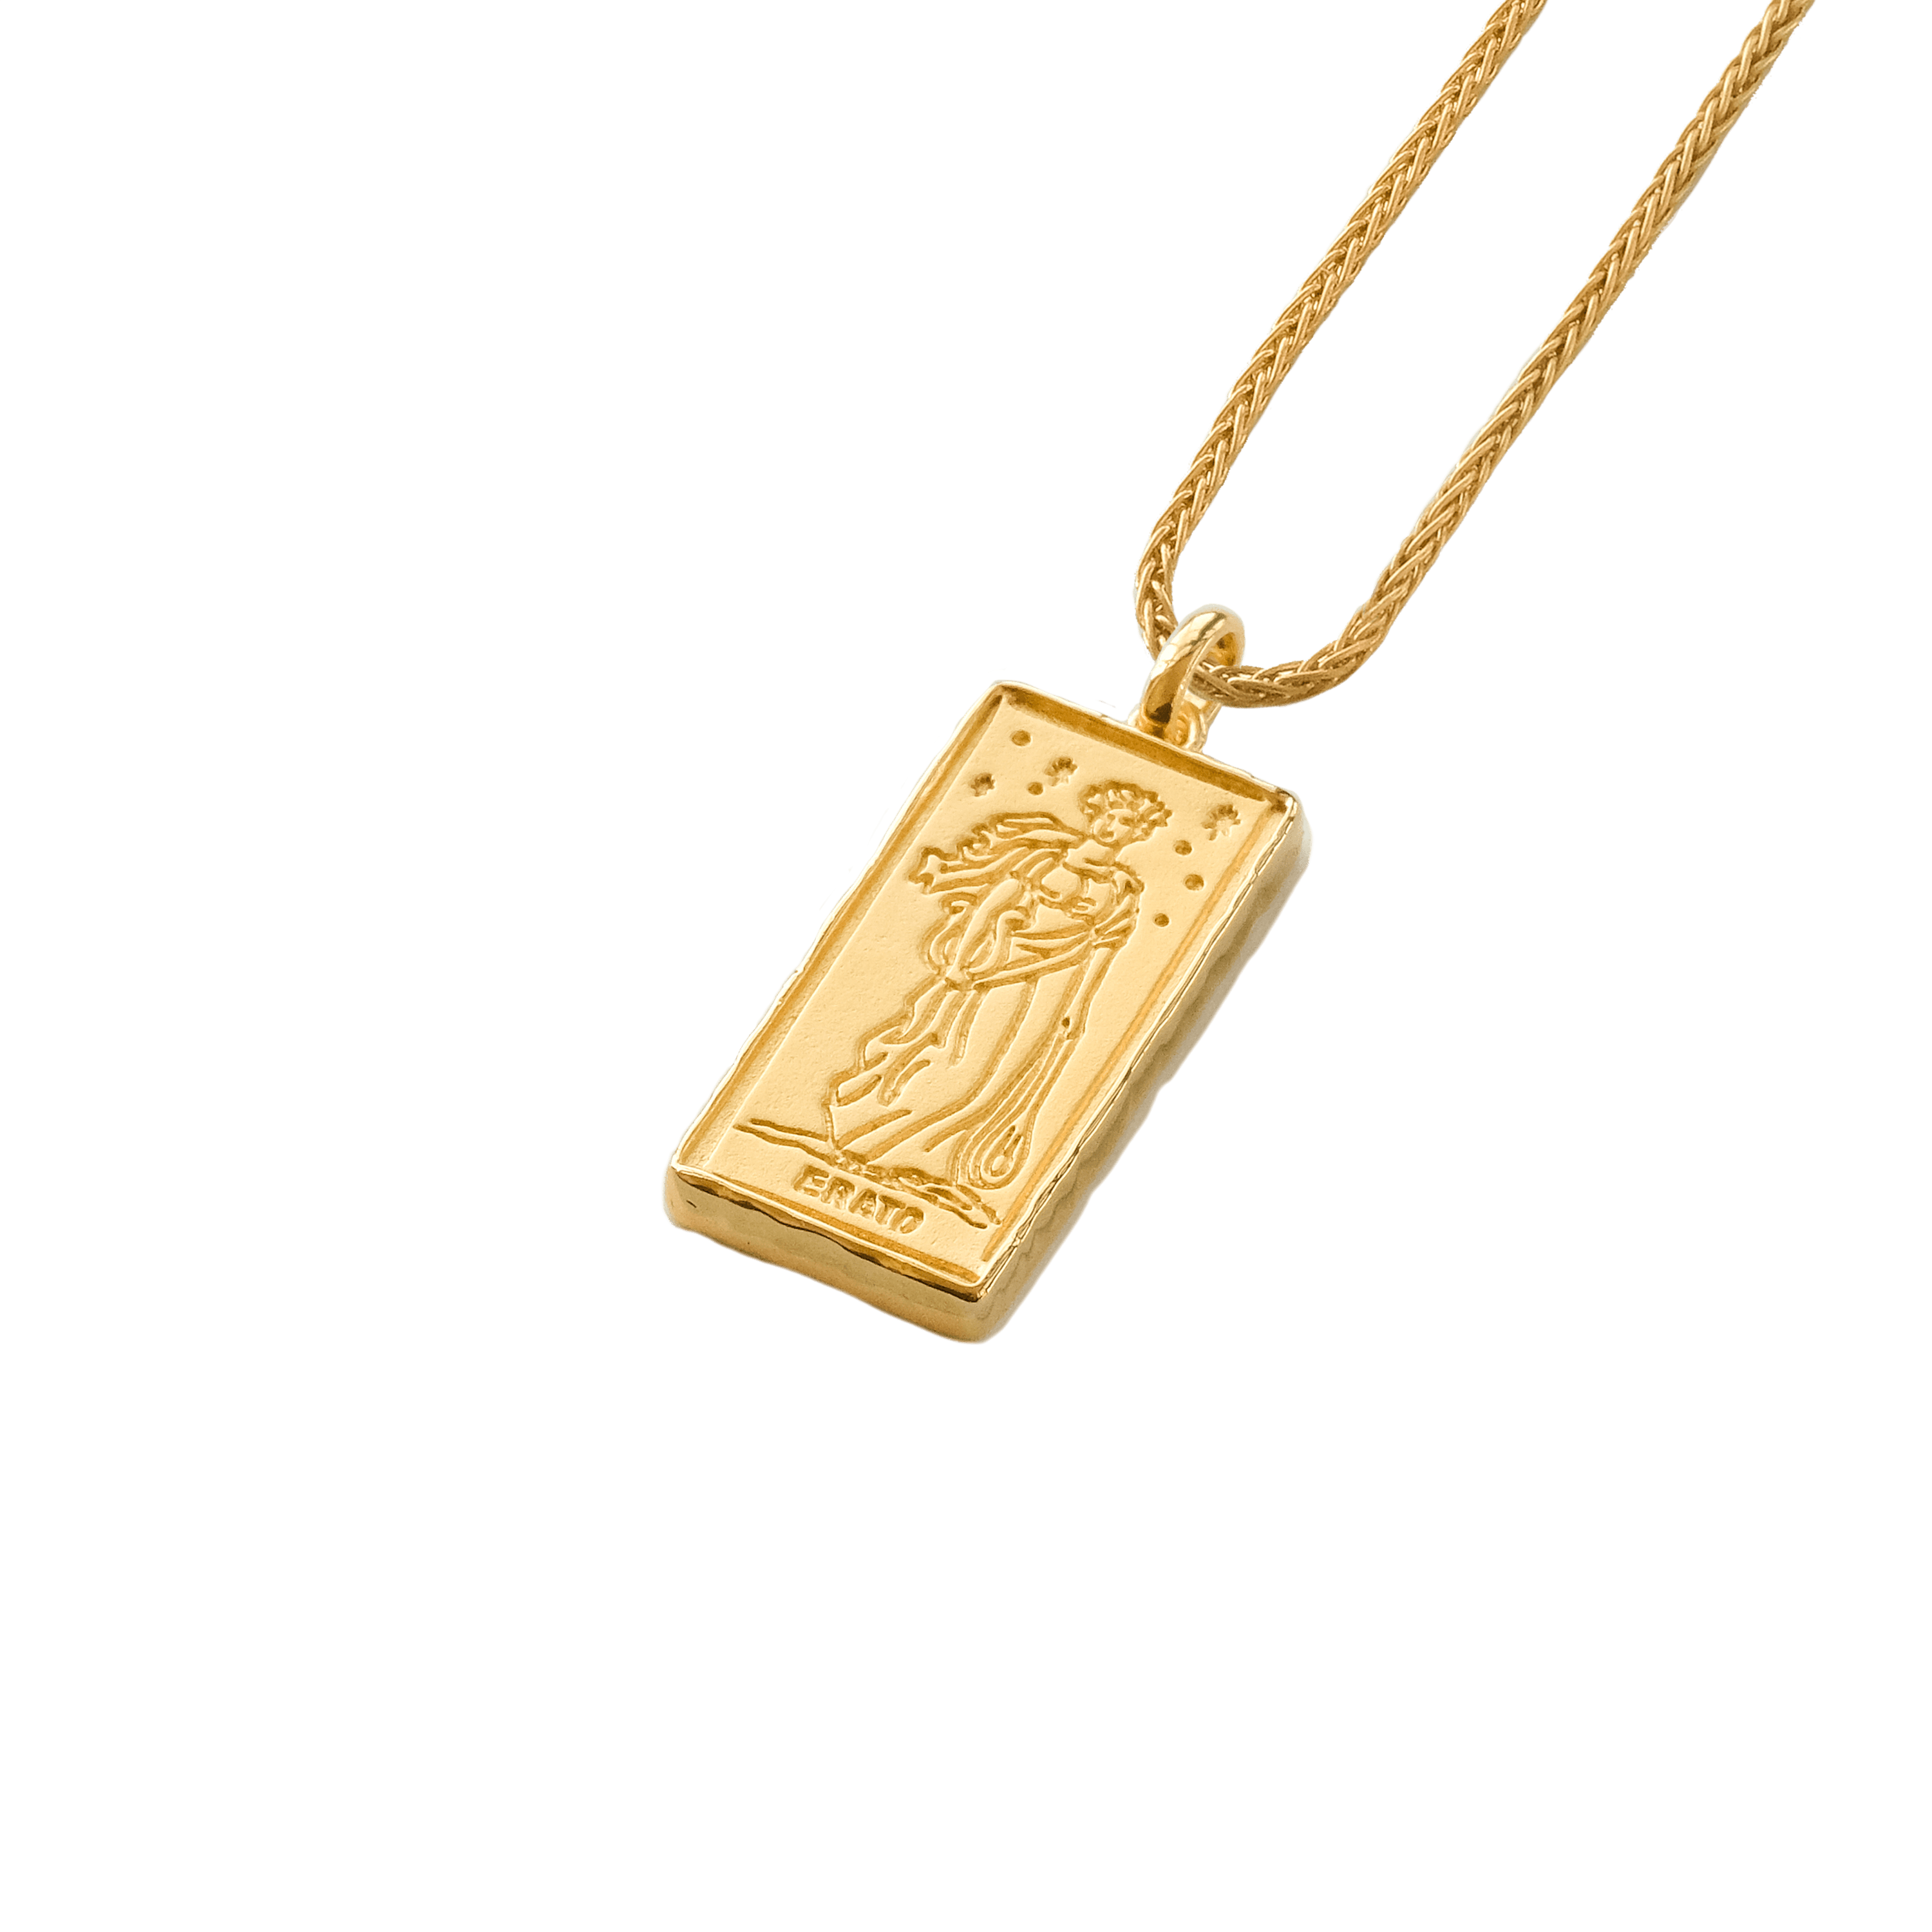 Erato Muse of Love Necklace |  Necklaces - Common Era Jewelry